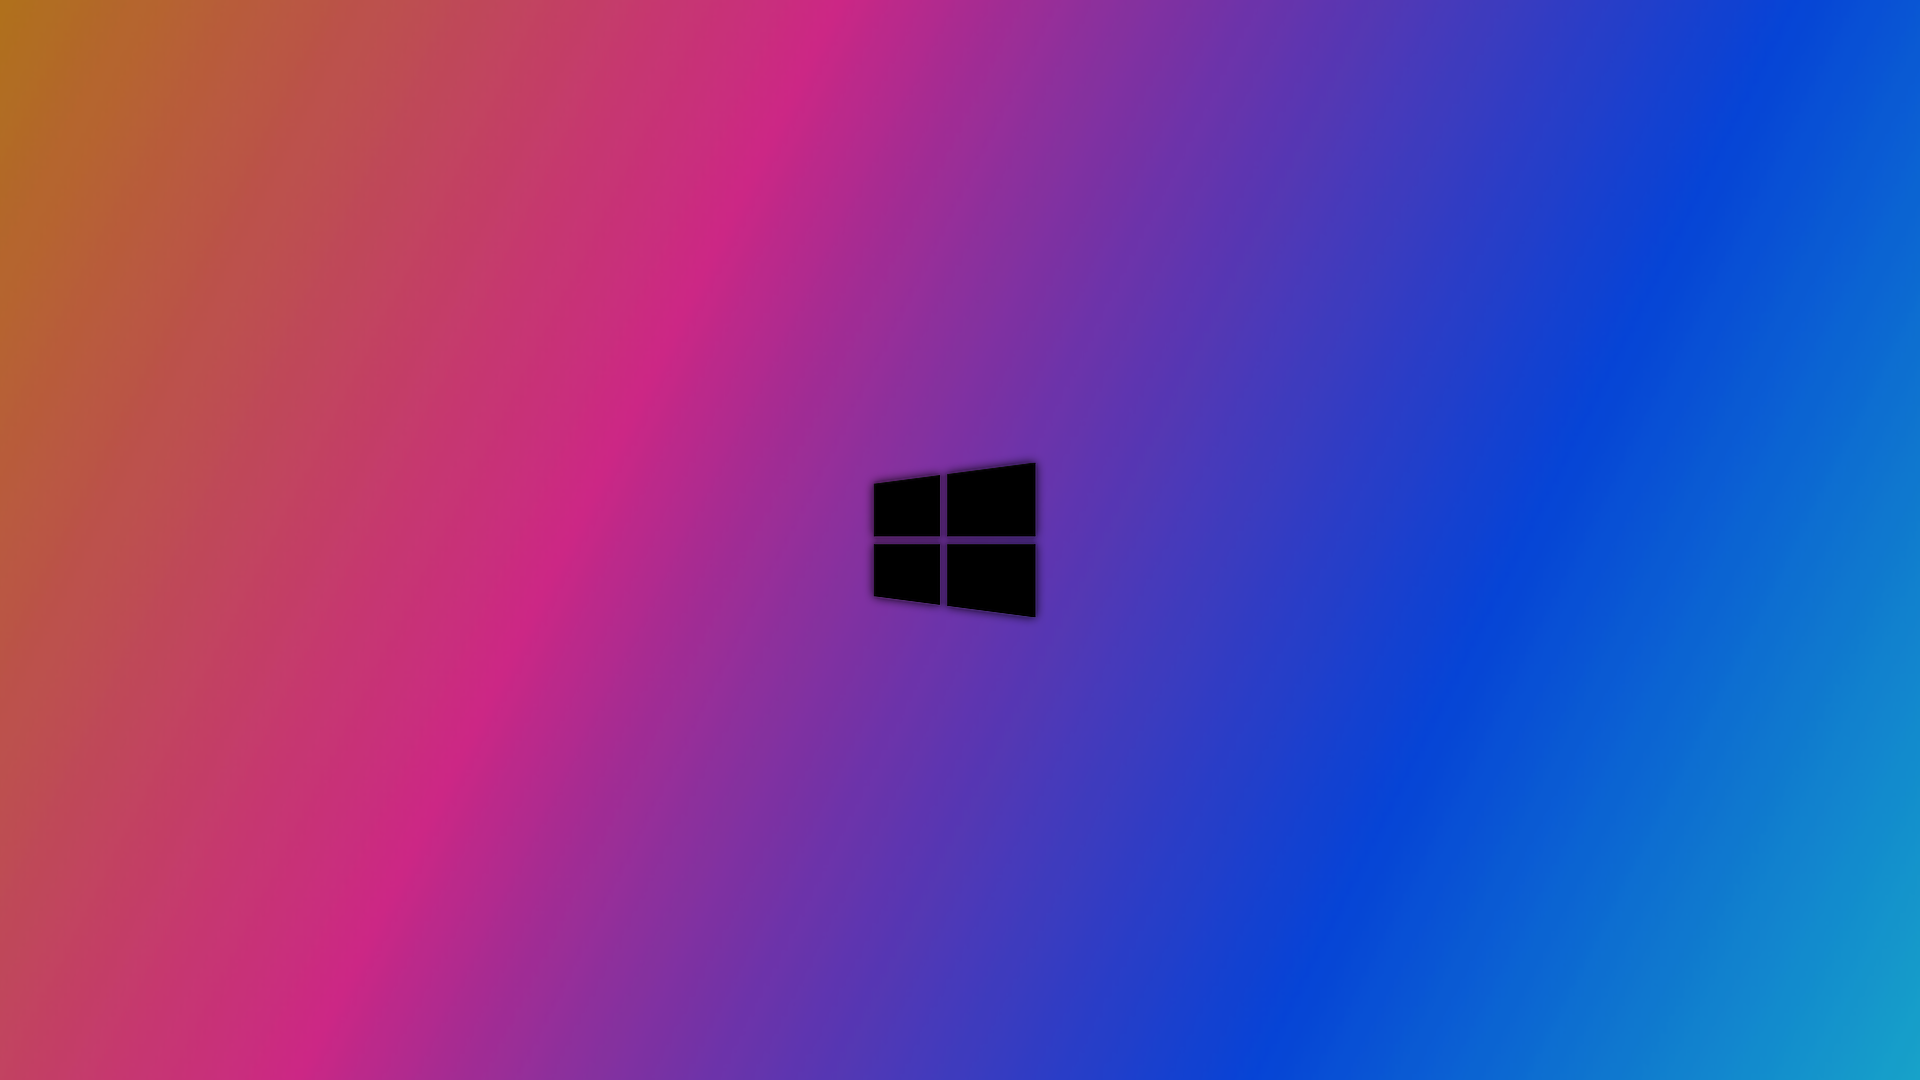 Wallpaper, Windows blurred, designer, colorful 1920x1080